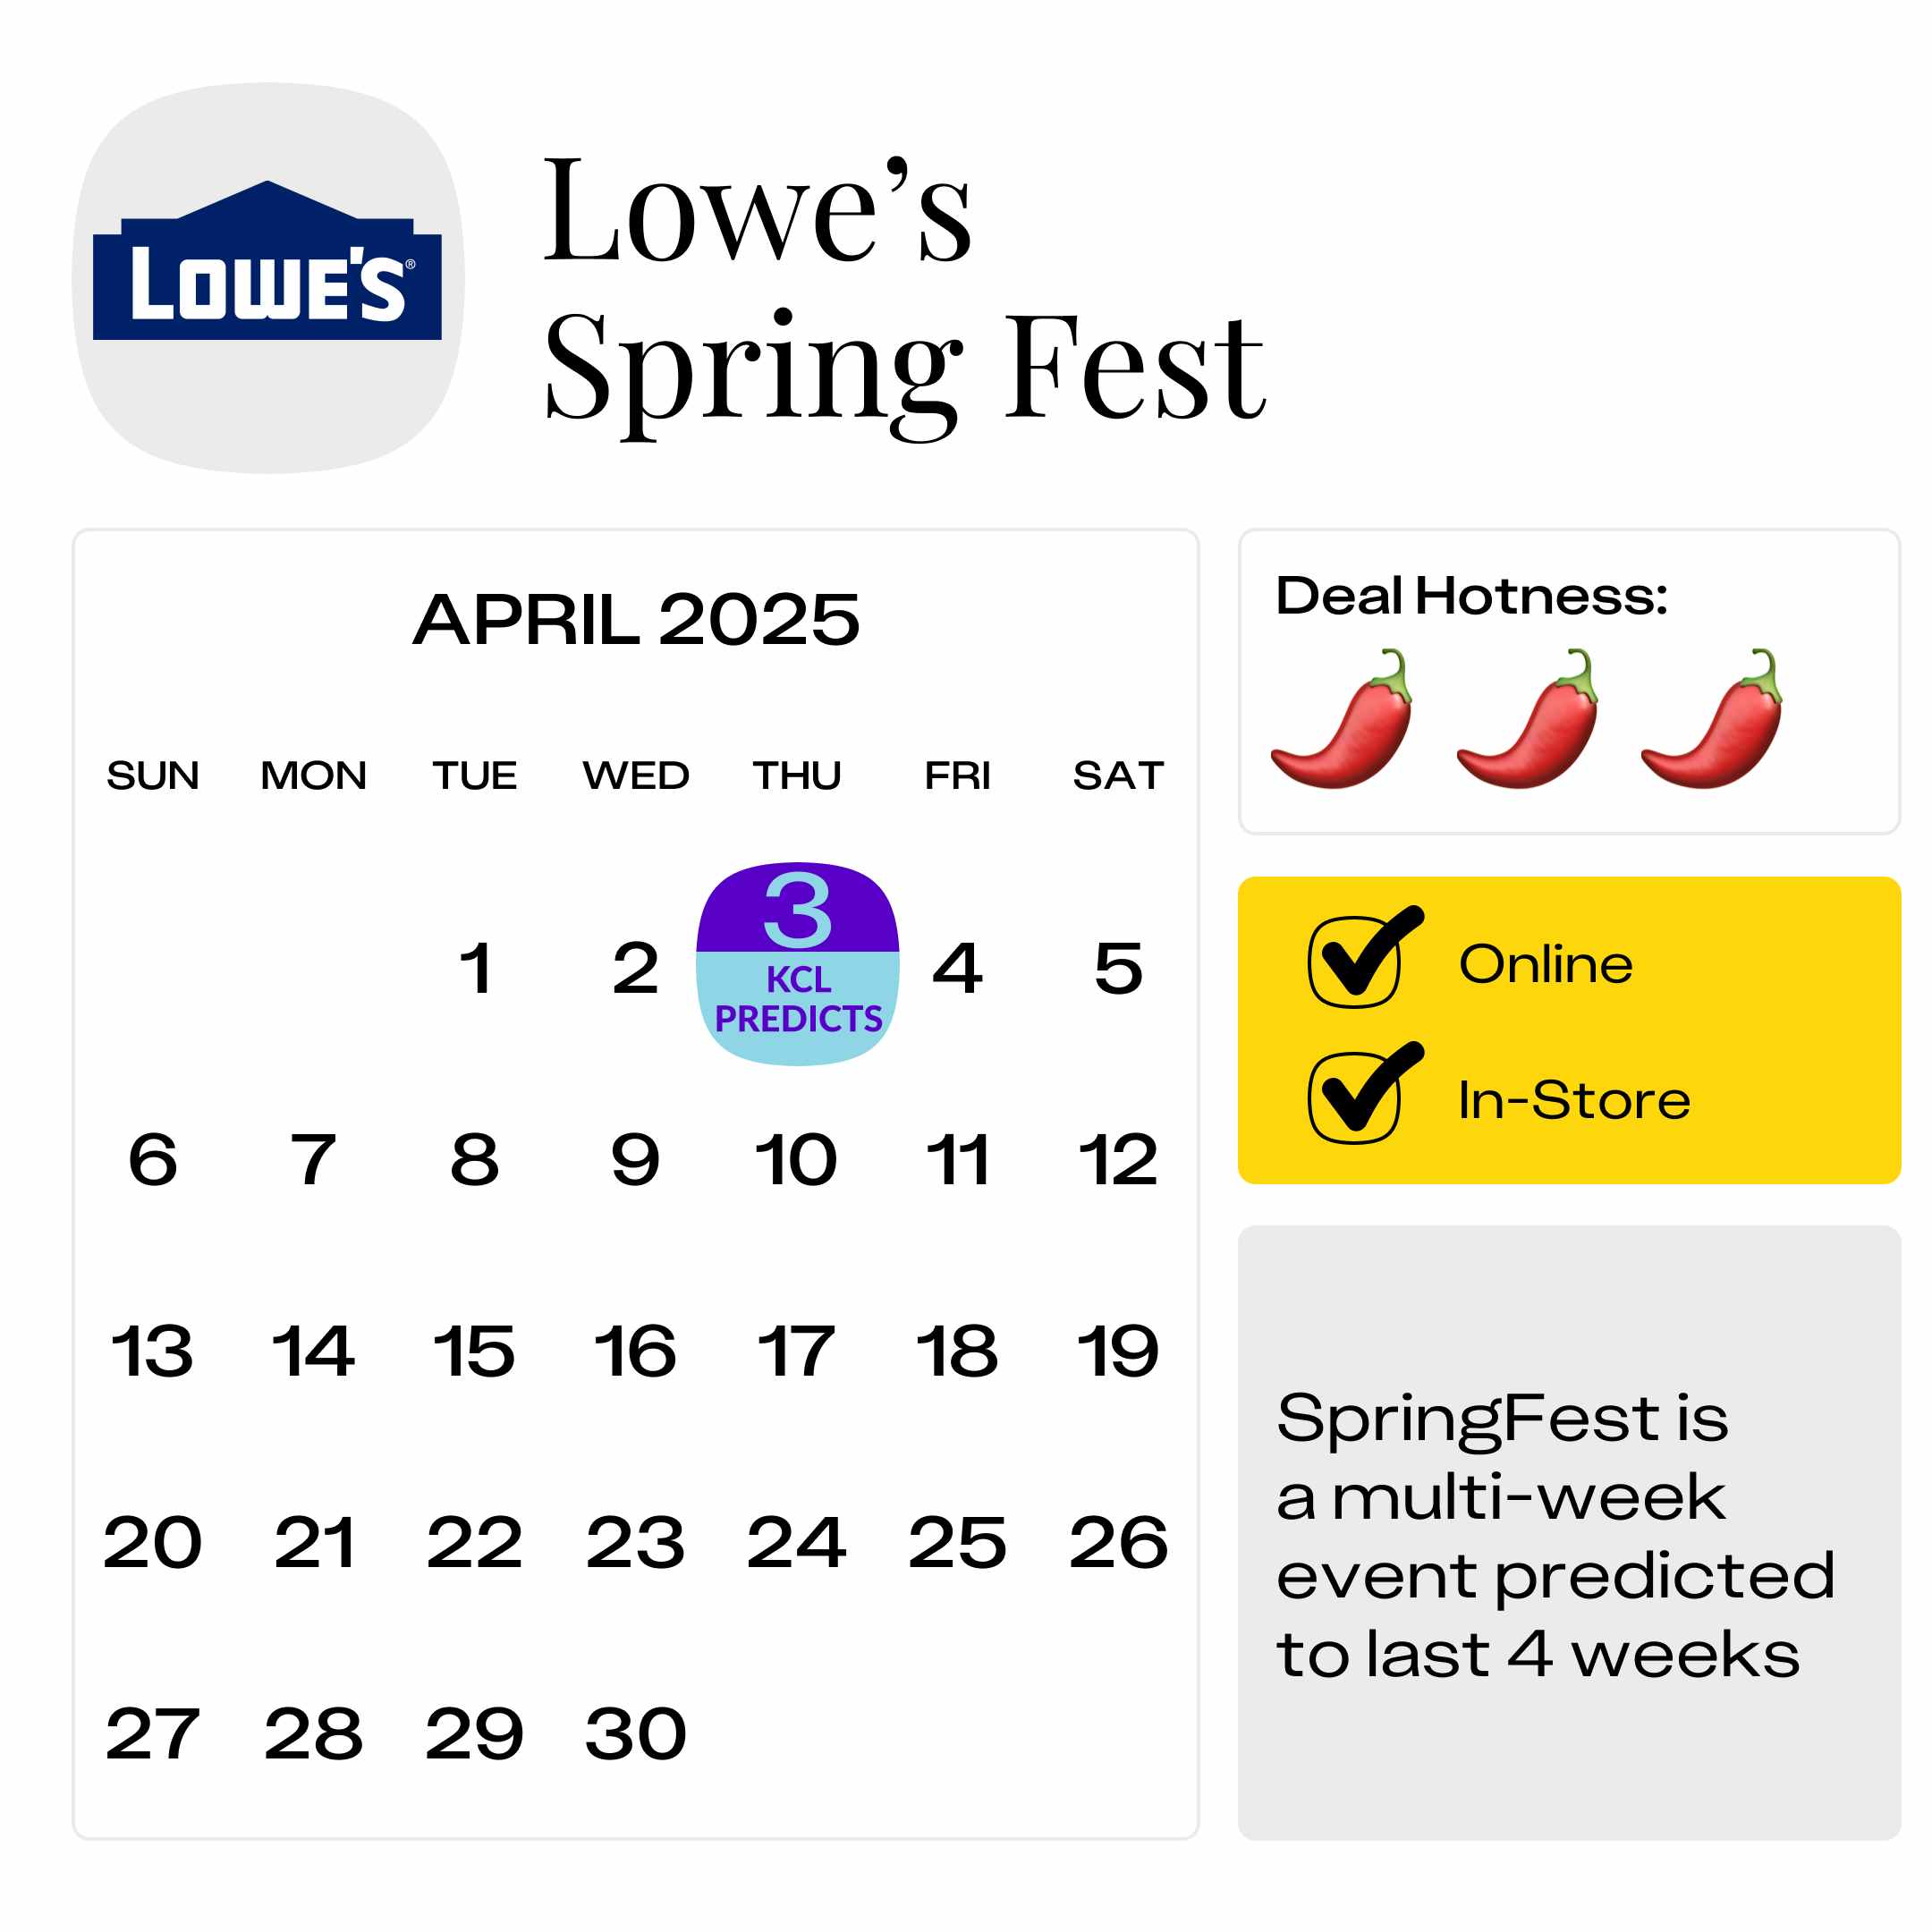 Lowes-Spring-Fest-2025